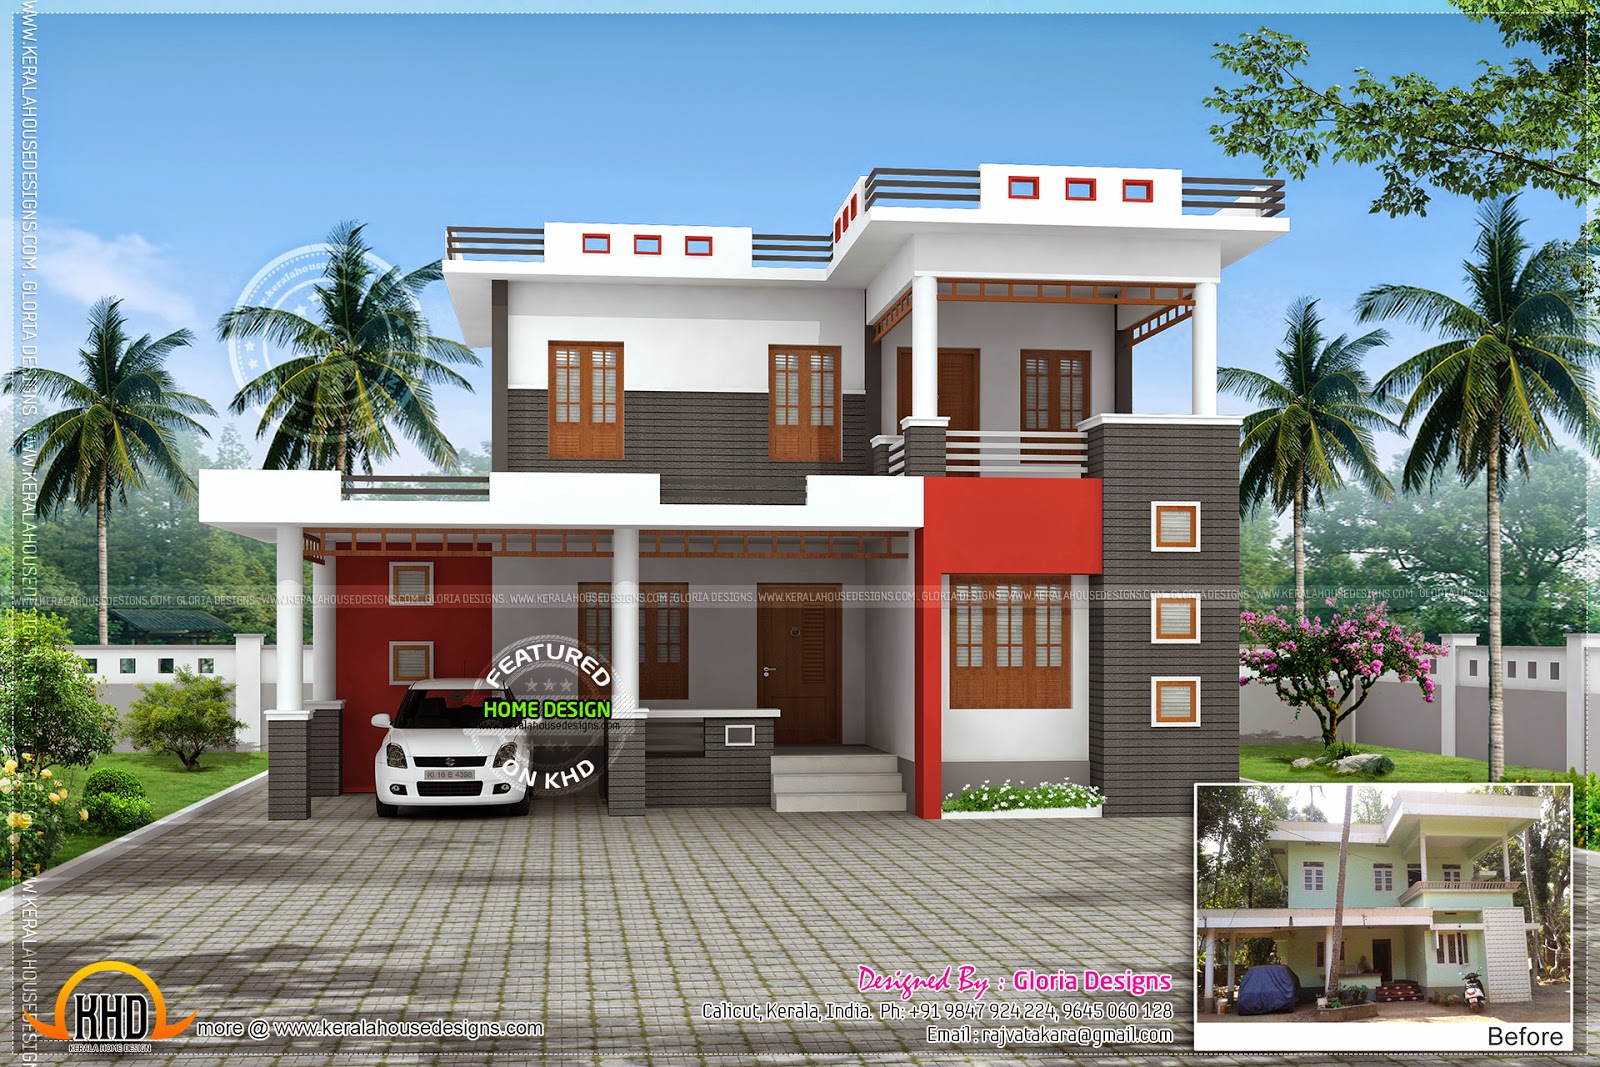 Renovation 3d  model  for an old house  Kerala home  design 